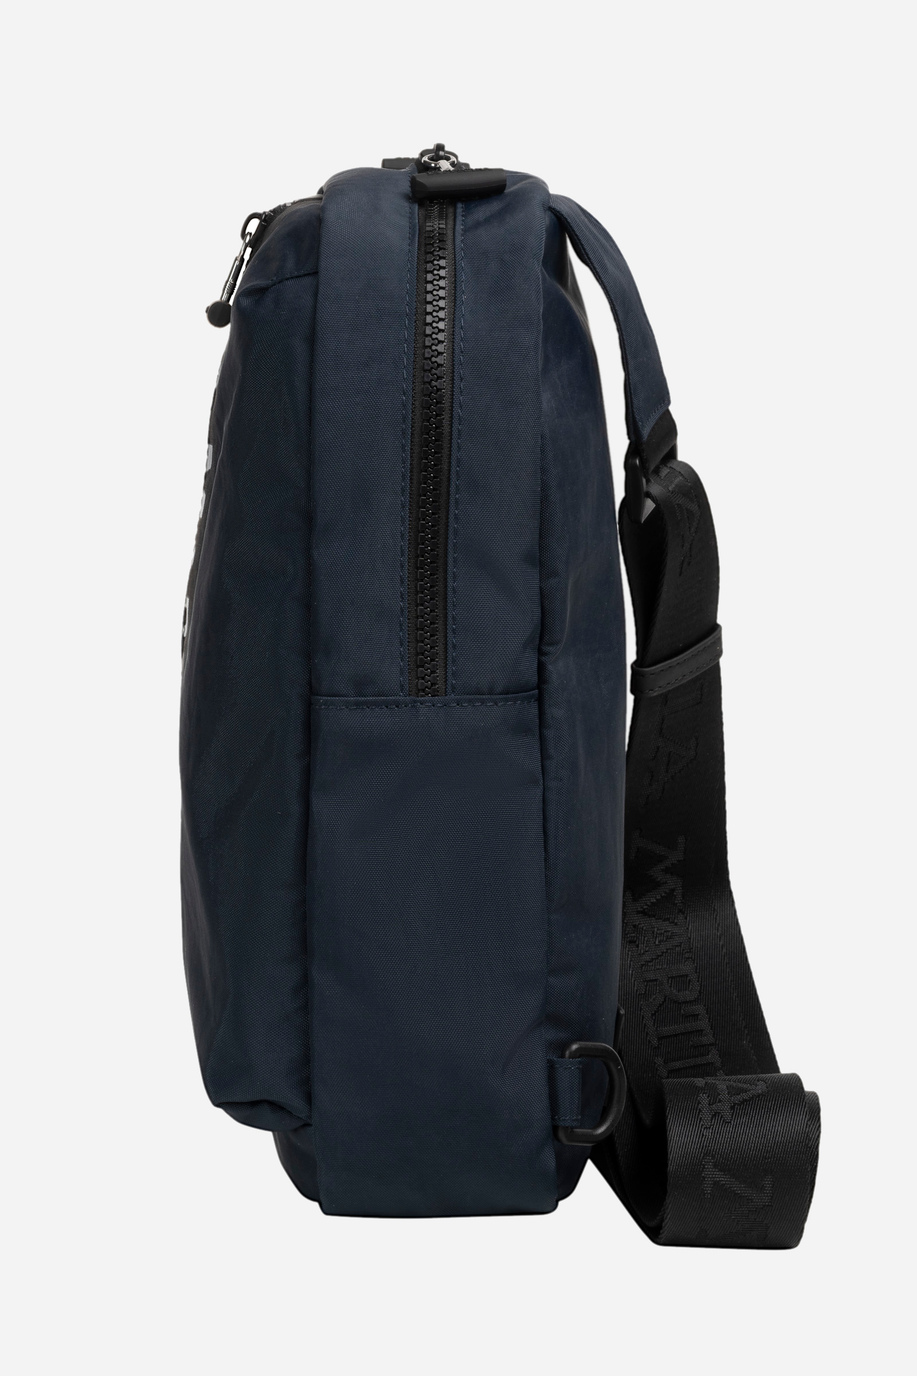 Herren-Bodybag aus Nylon - Yuri - Accessories | La Martina - Official Online Shop